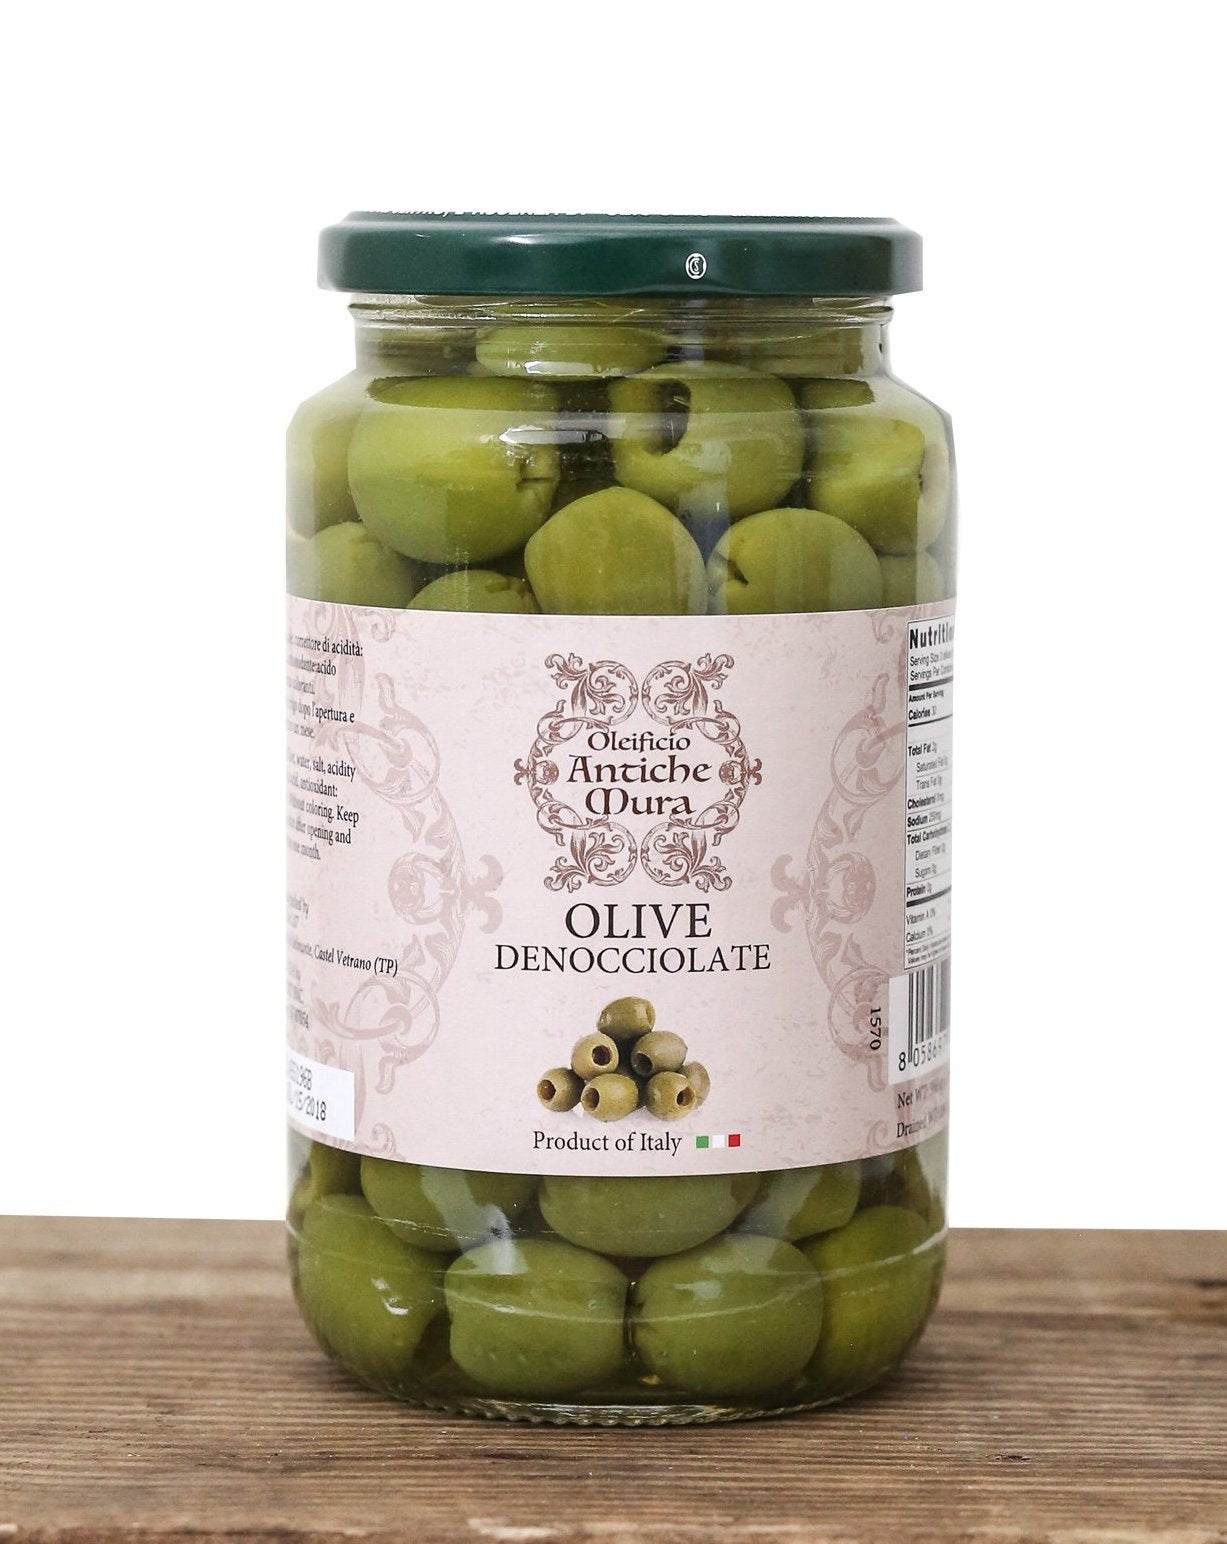 Olives “Denocciolate”